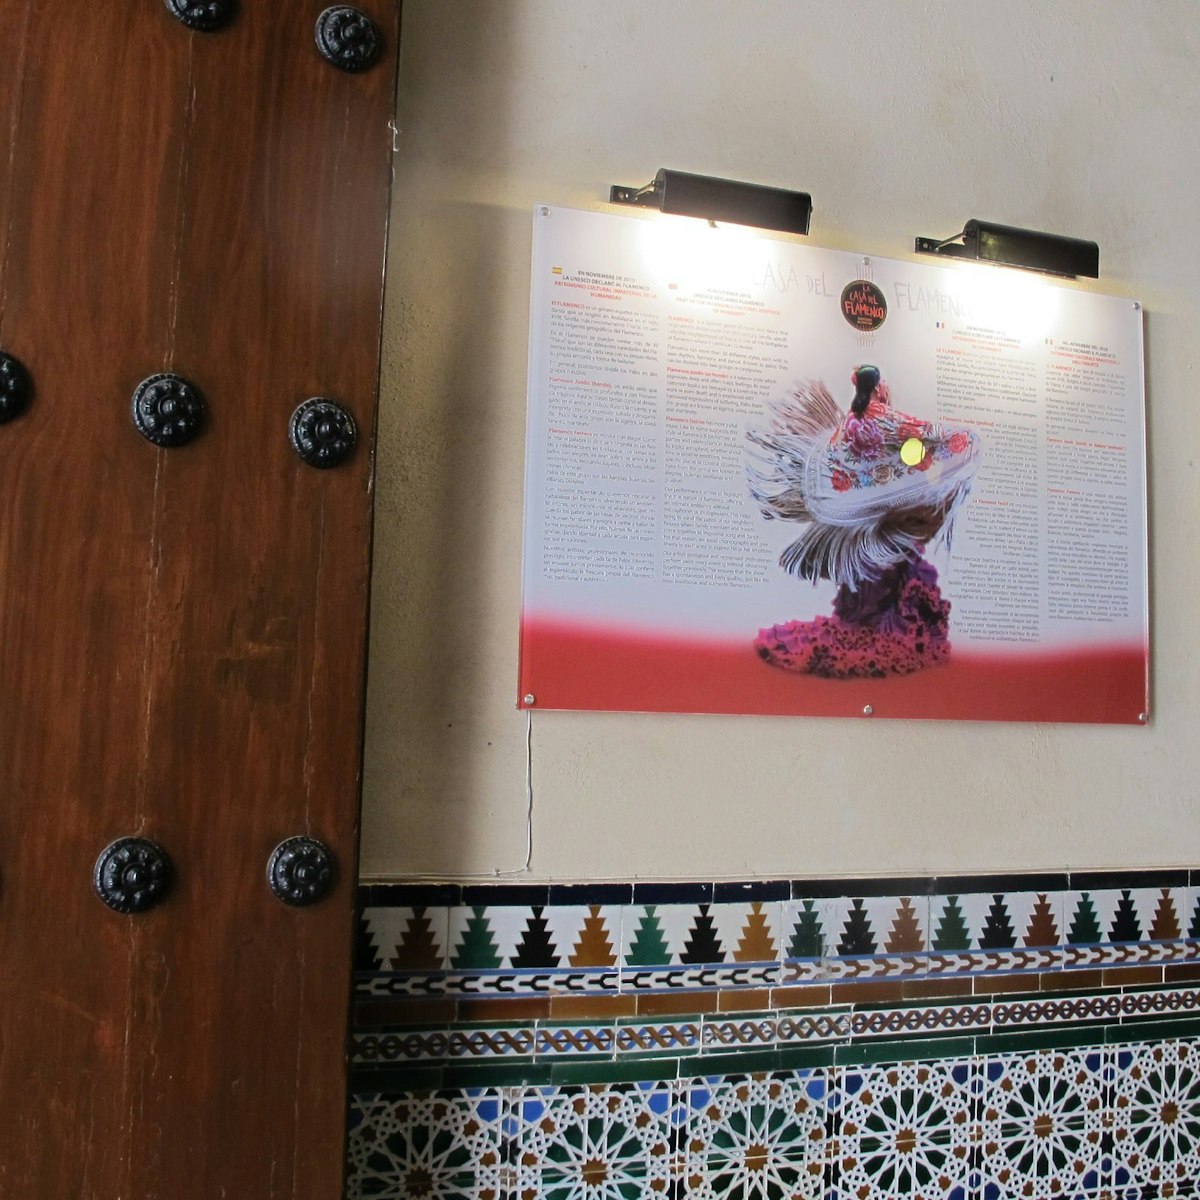 Casa del Flamenco door, tiles, poster.